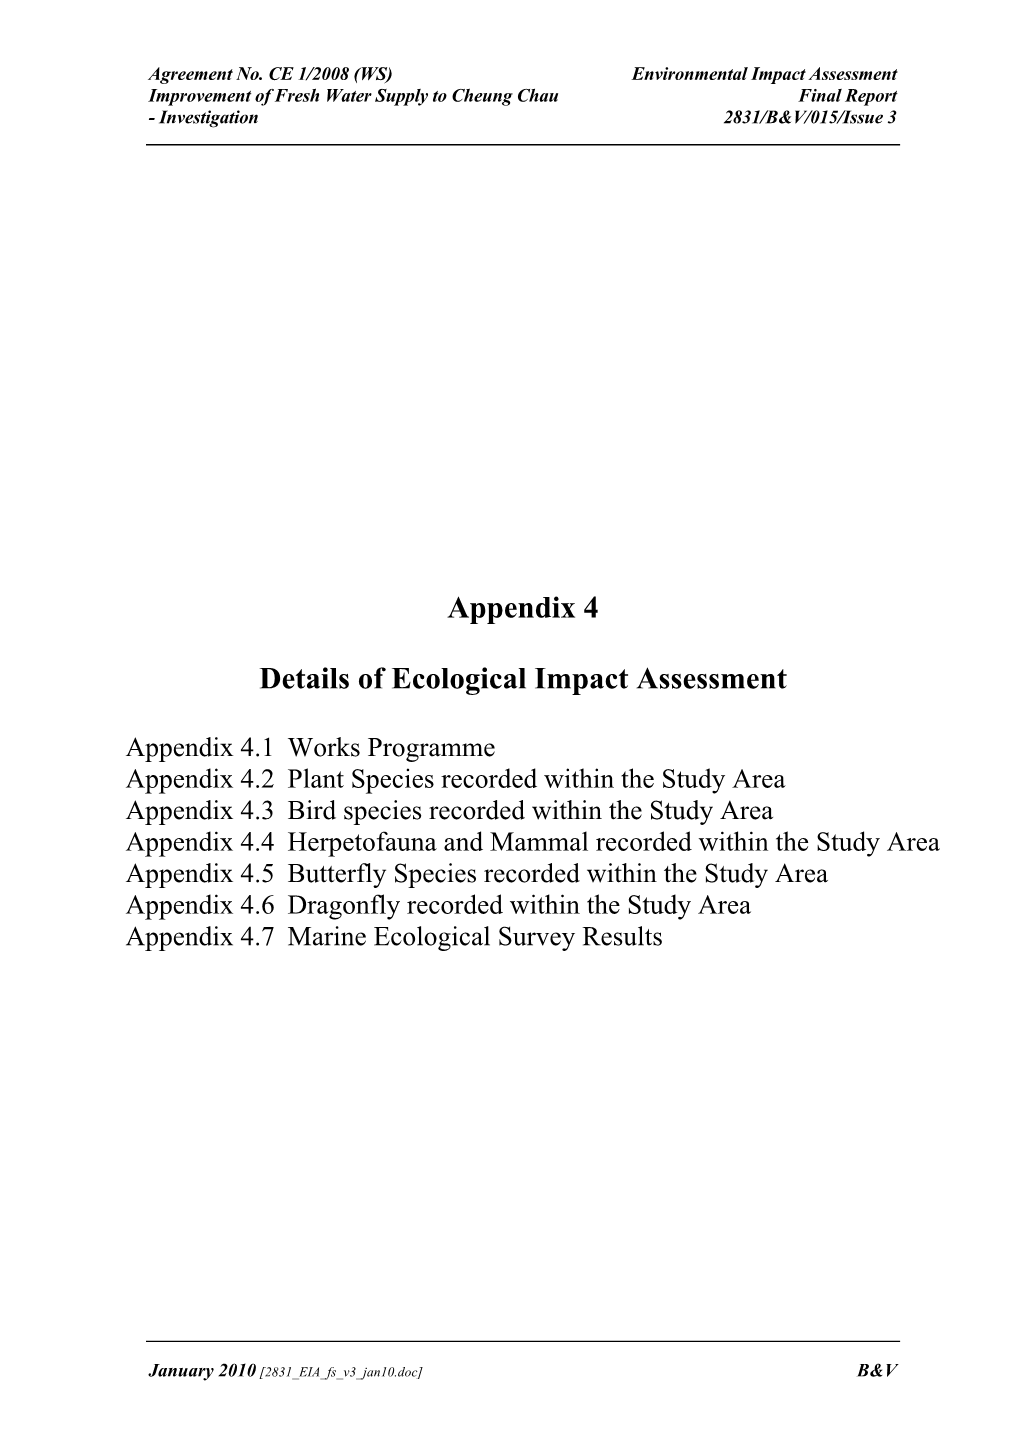 Appendix 4 Details of Ecological Impact Assessment